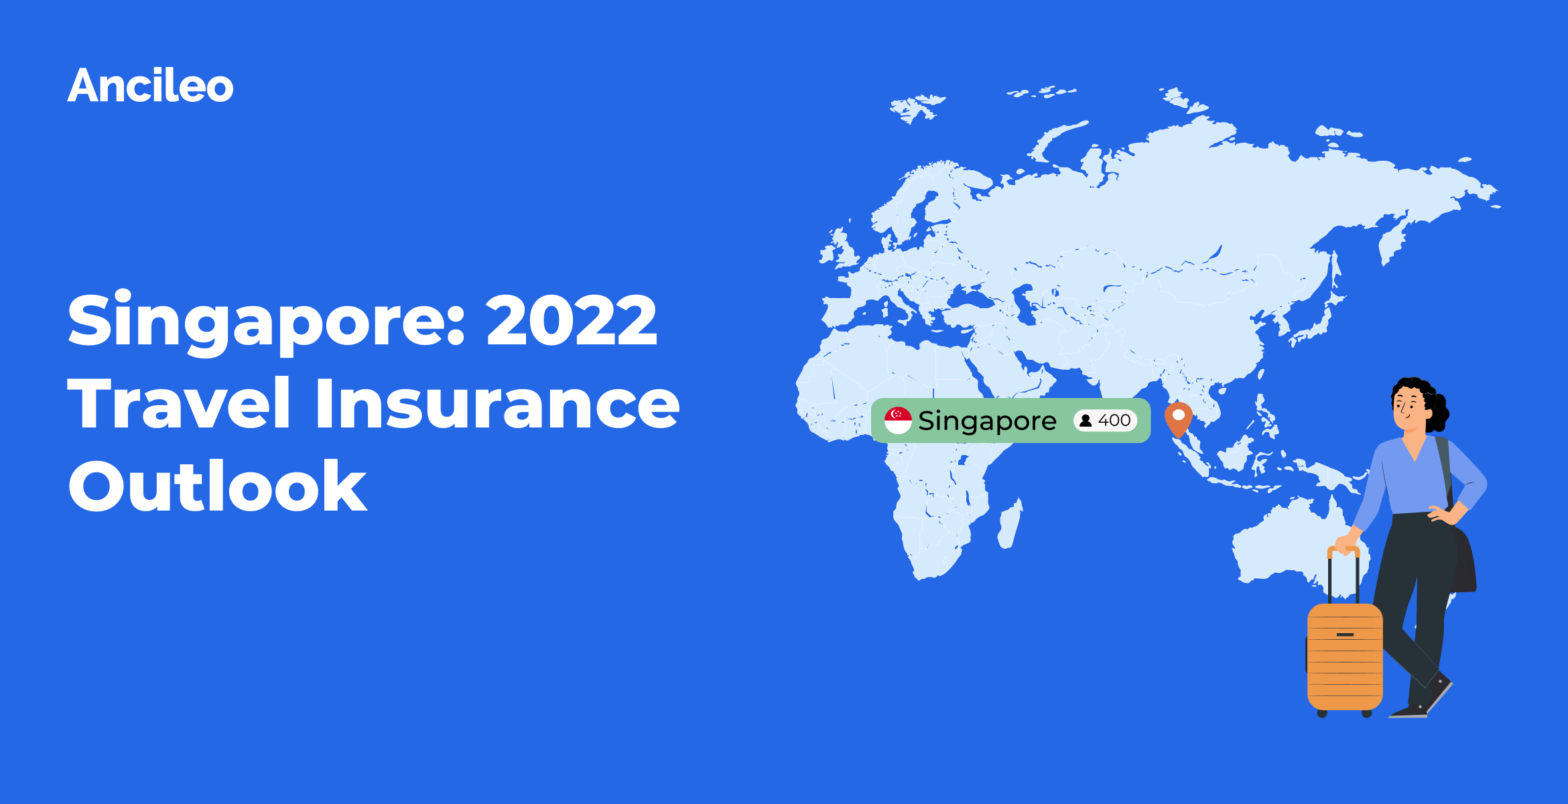 Singapore: 2022 Travel Insurance Outlook